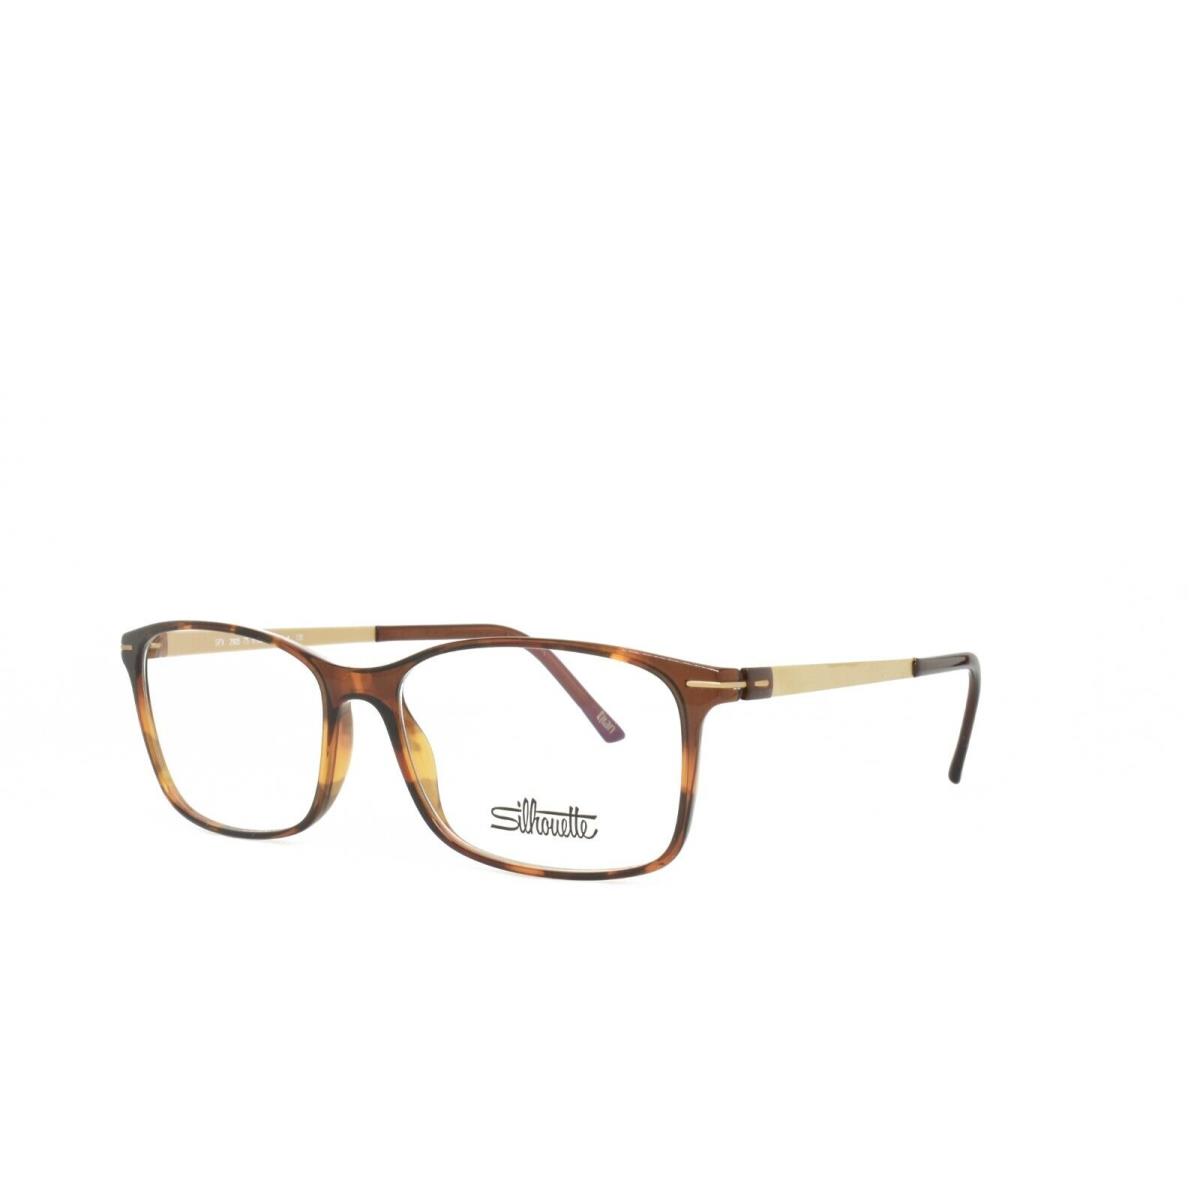 Silhouette Spx Illusion 2905 75 6120 Eyeglasses 53-15-135 Brown